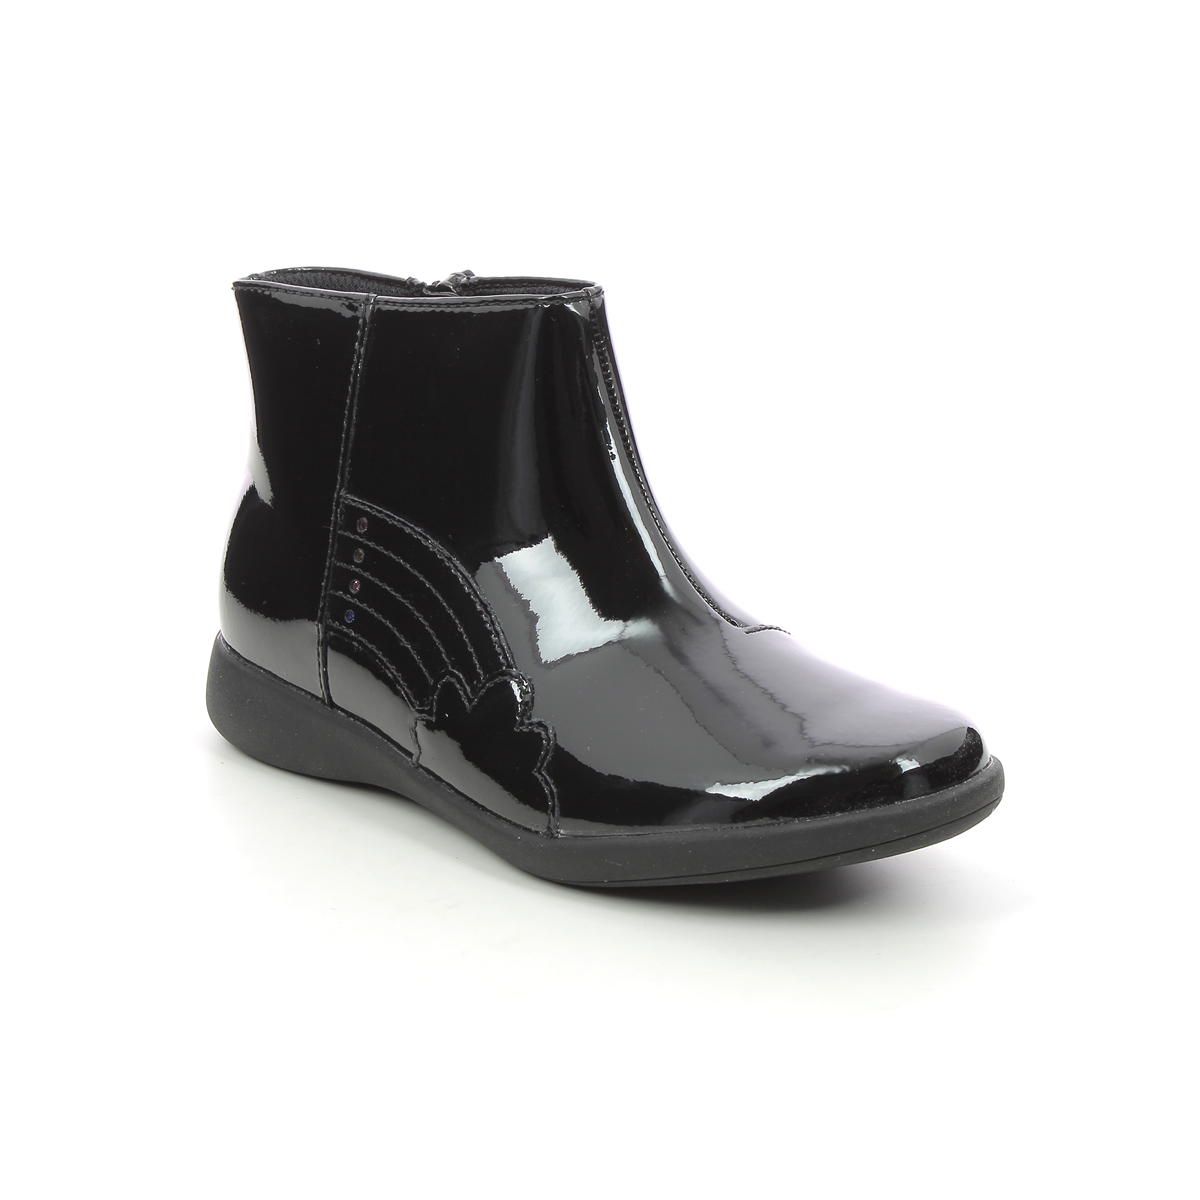 Clarks Etch Glow K Black Patent Kids Girls Boots 628486F In Size 2.5 In Plain Black Patent F Width Fitting Regular Fit For kids